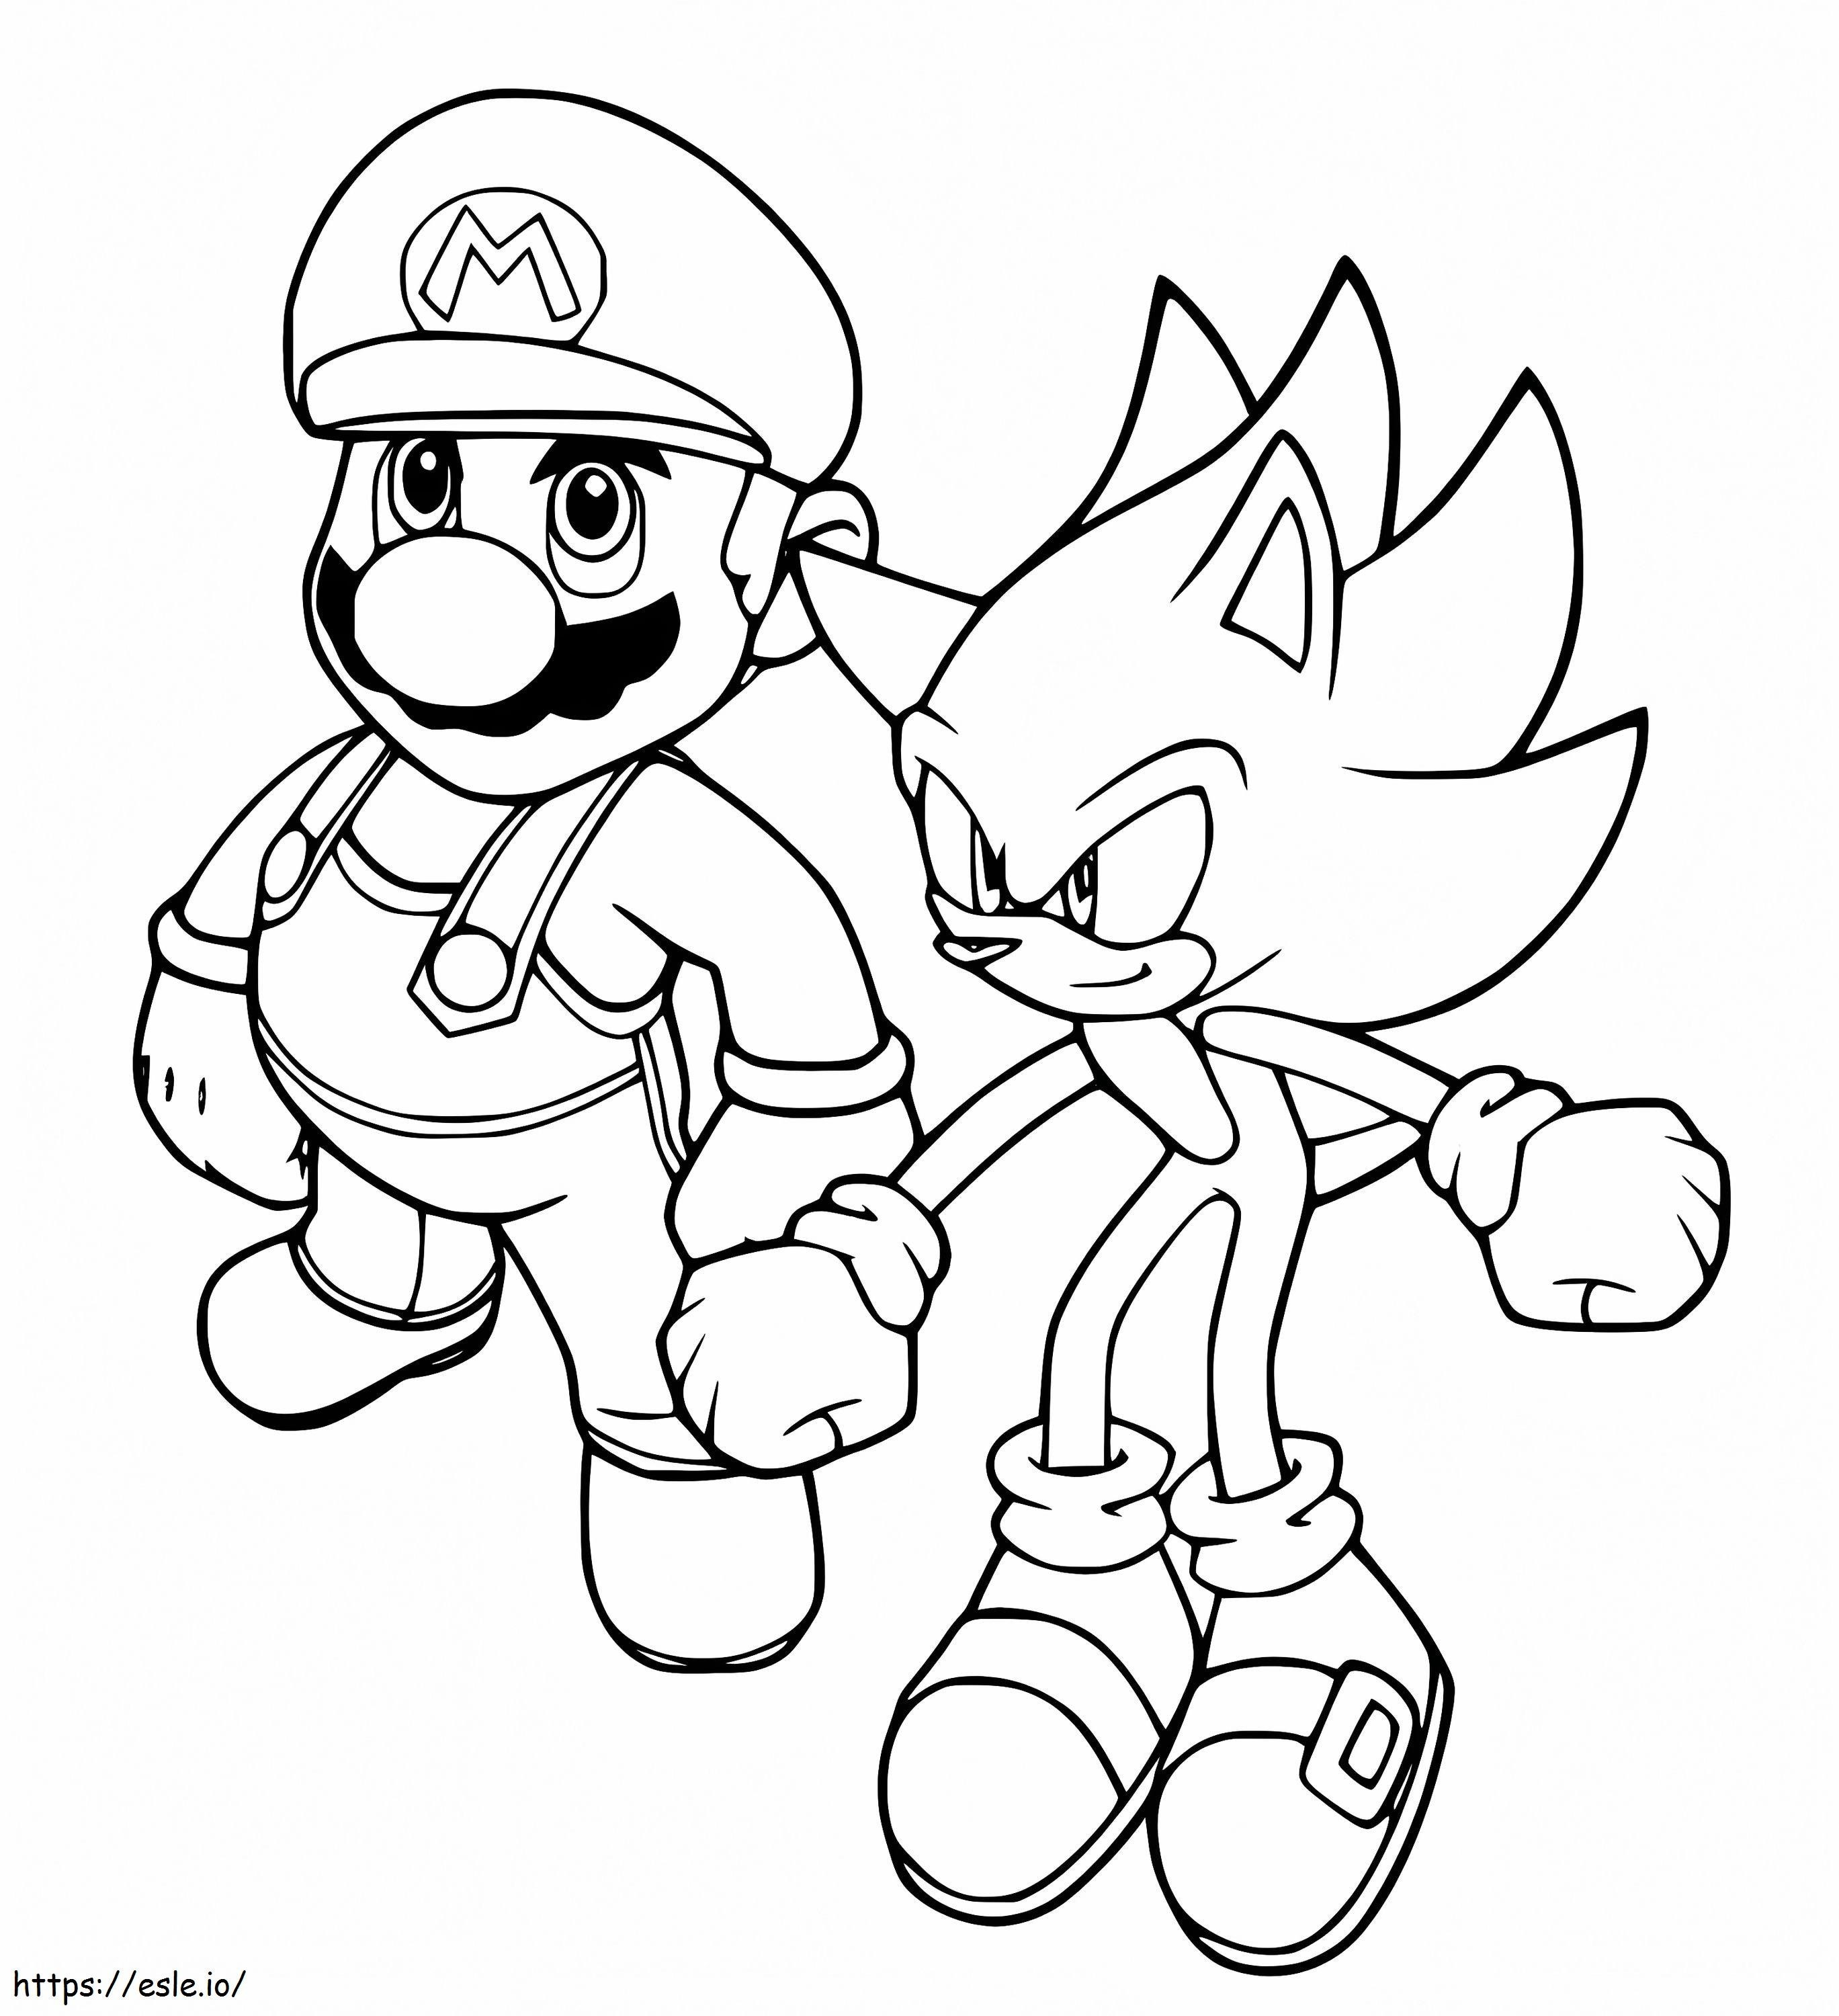 Mario și Sonic de colorat